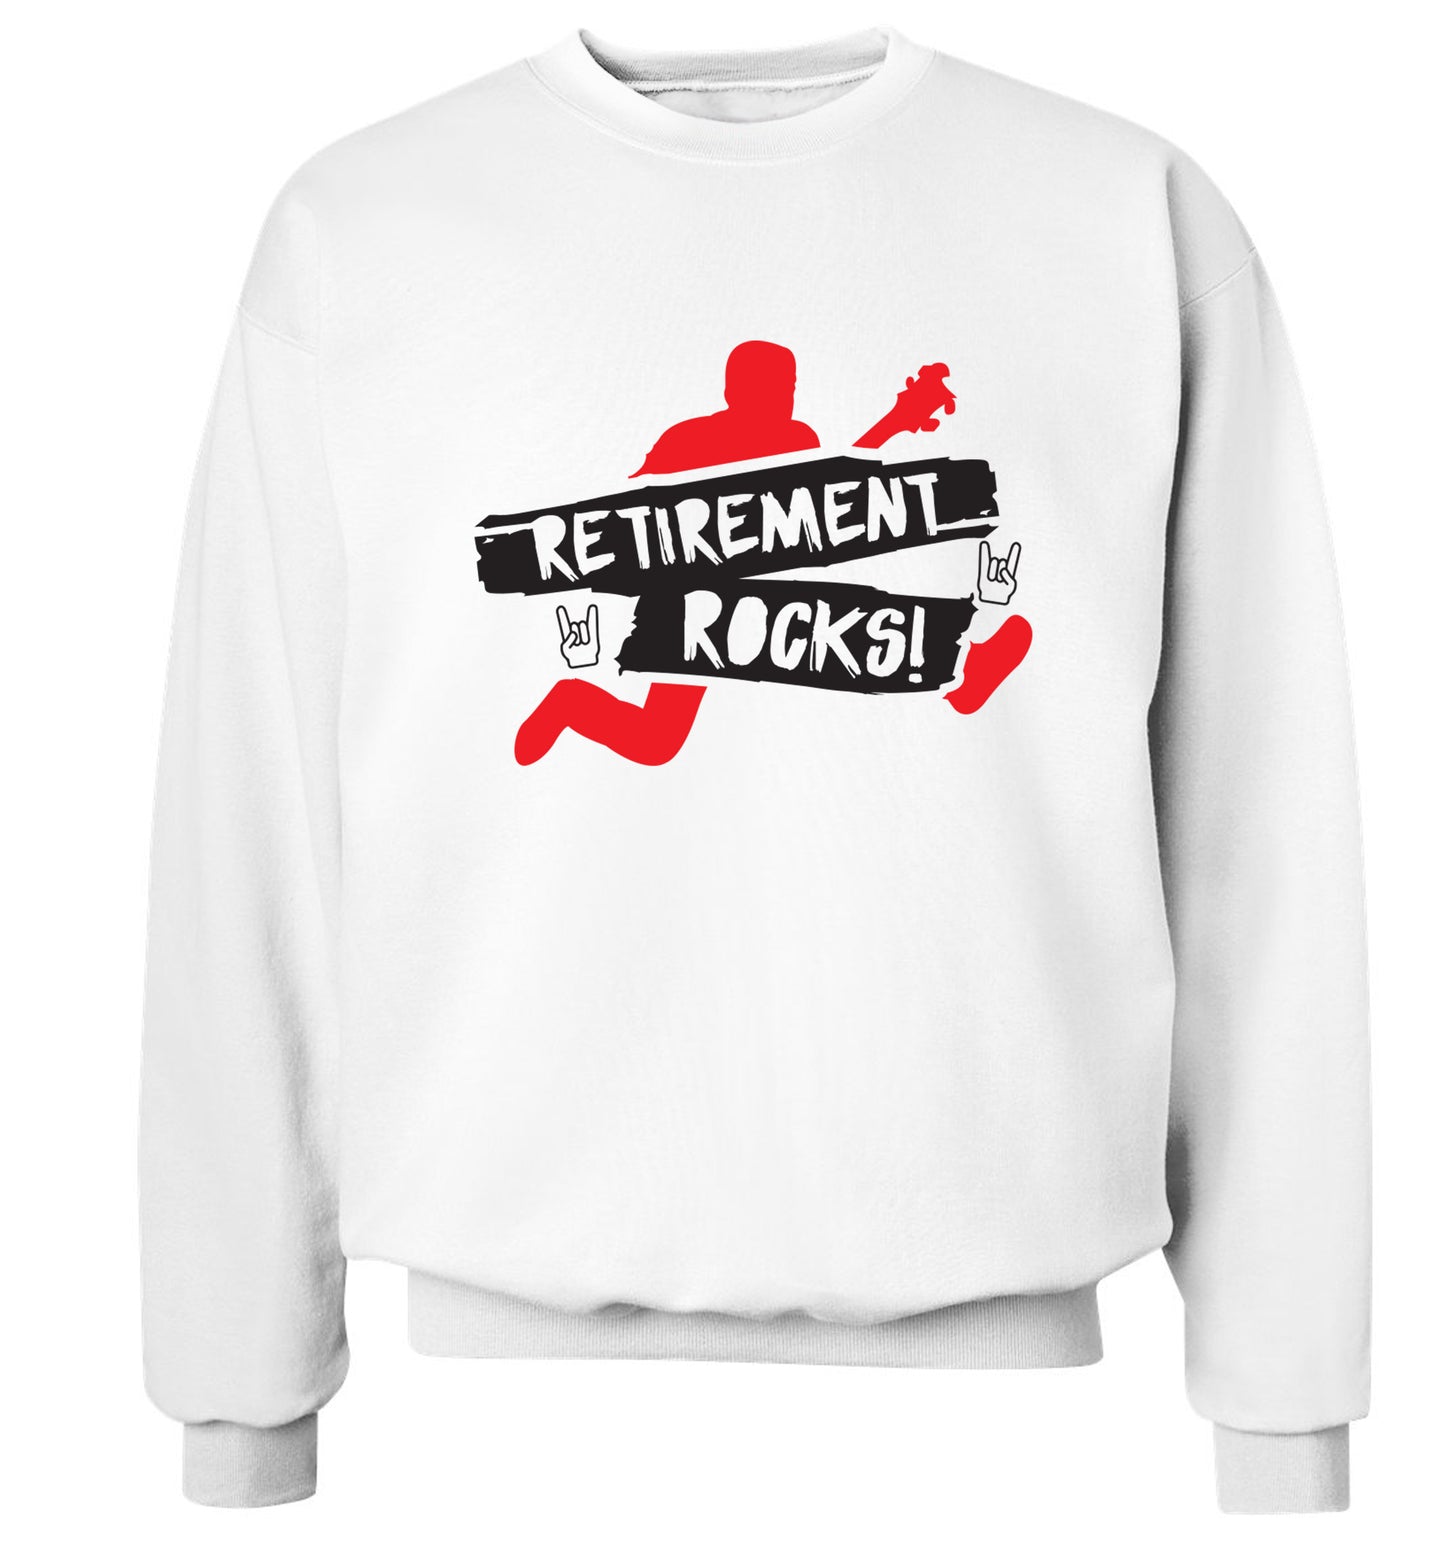 Retirement Rocks Adult's unisex white Sweater 2XL